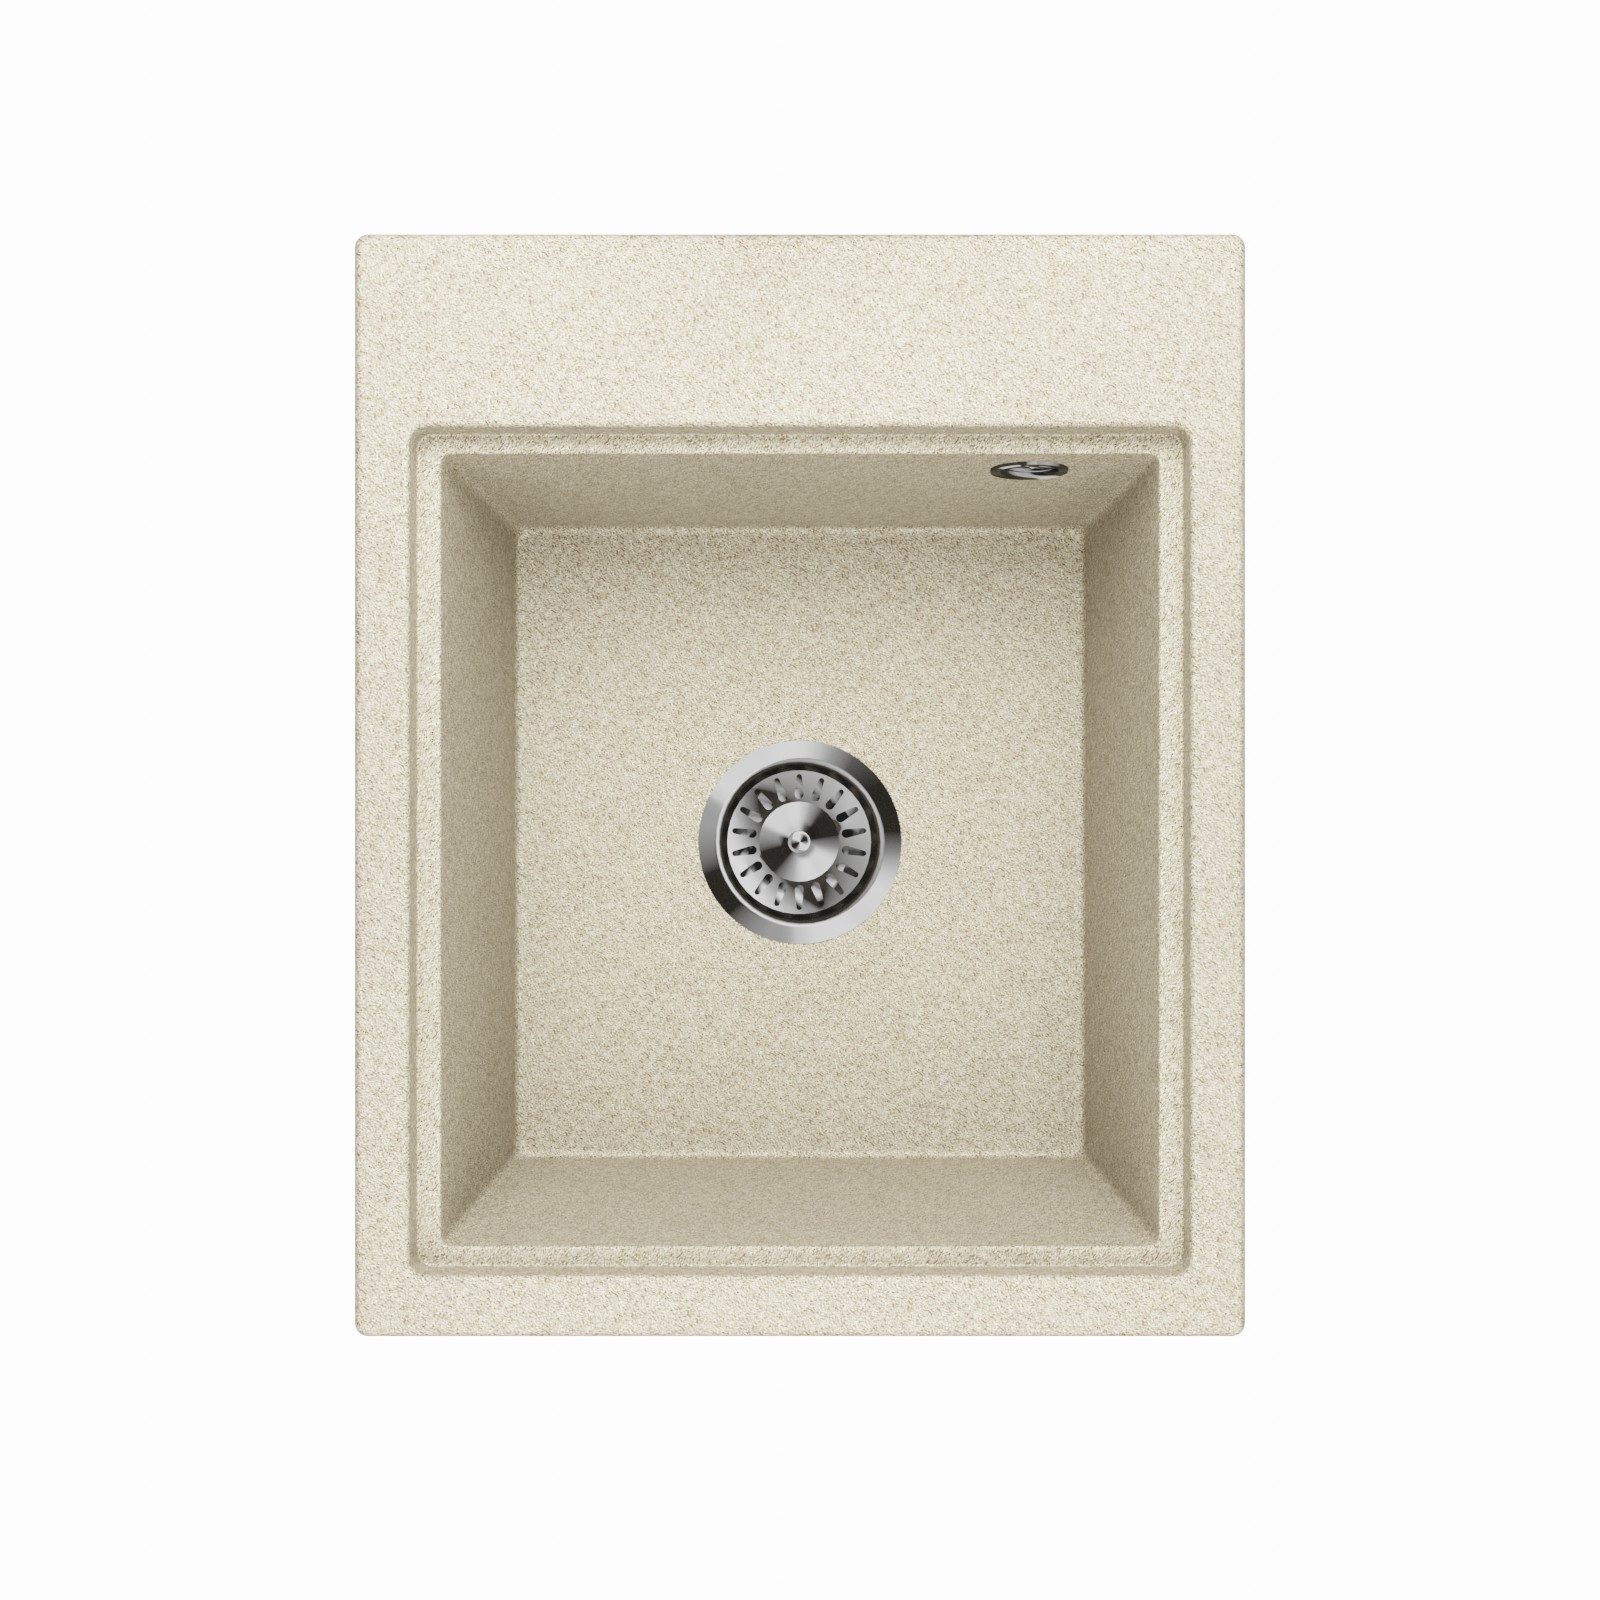 QLS Küchenspüle Comfort 0.0S, Granit-Spülbecken, 40x49,5cm Granitspüle Spülbecken Waschbecken tiefe Kammer